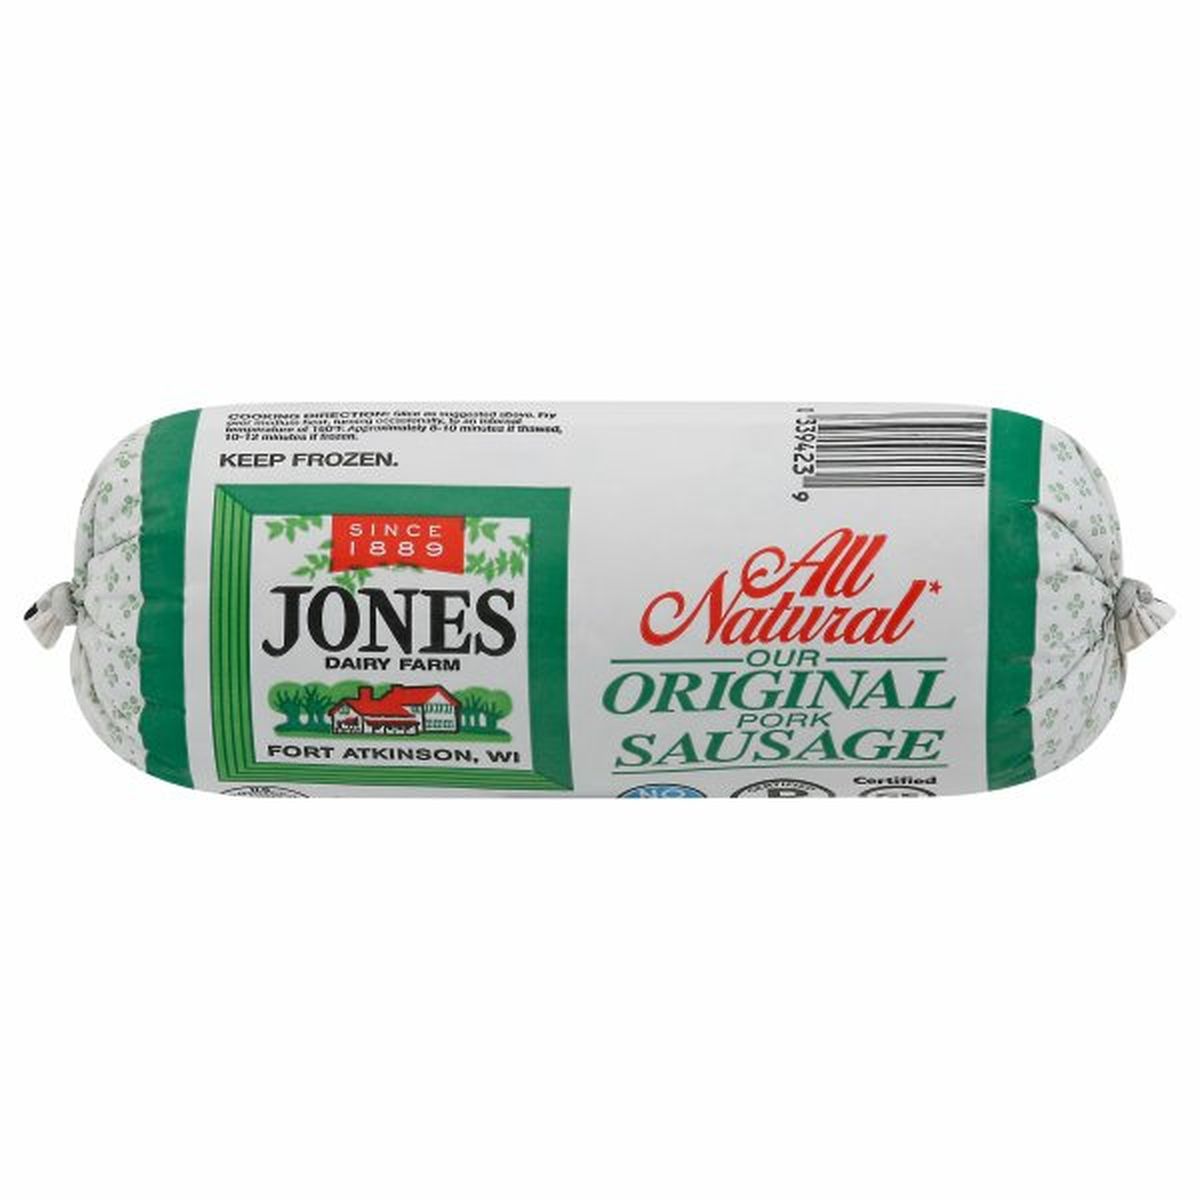 Calories in Jones Dairy Farm Pork Sausage, Original